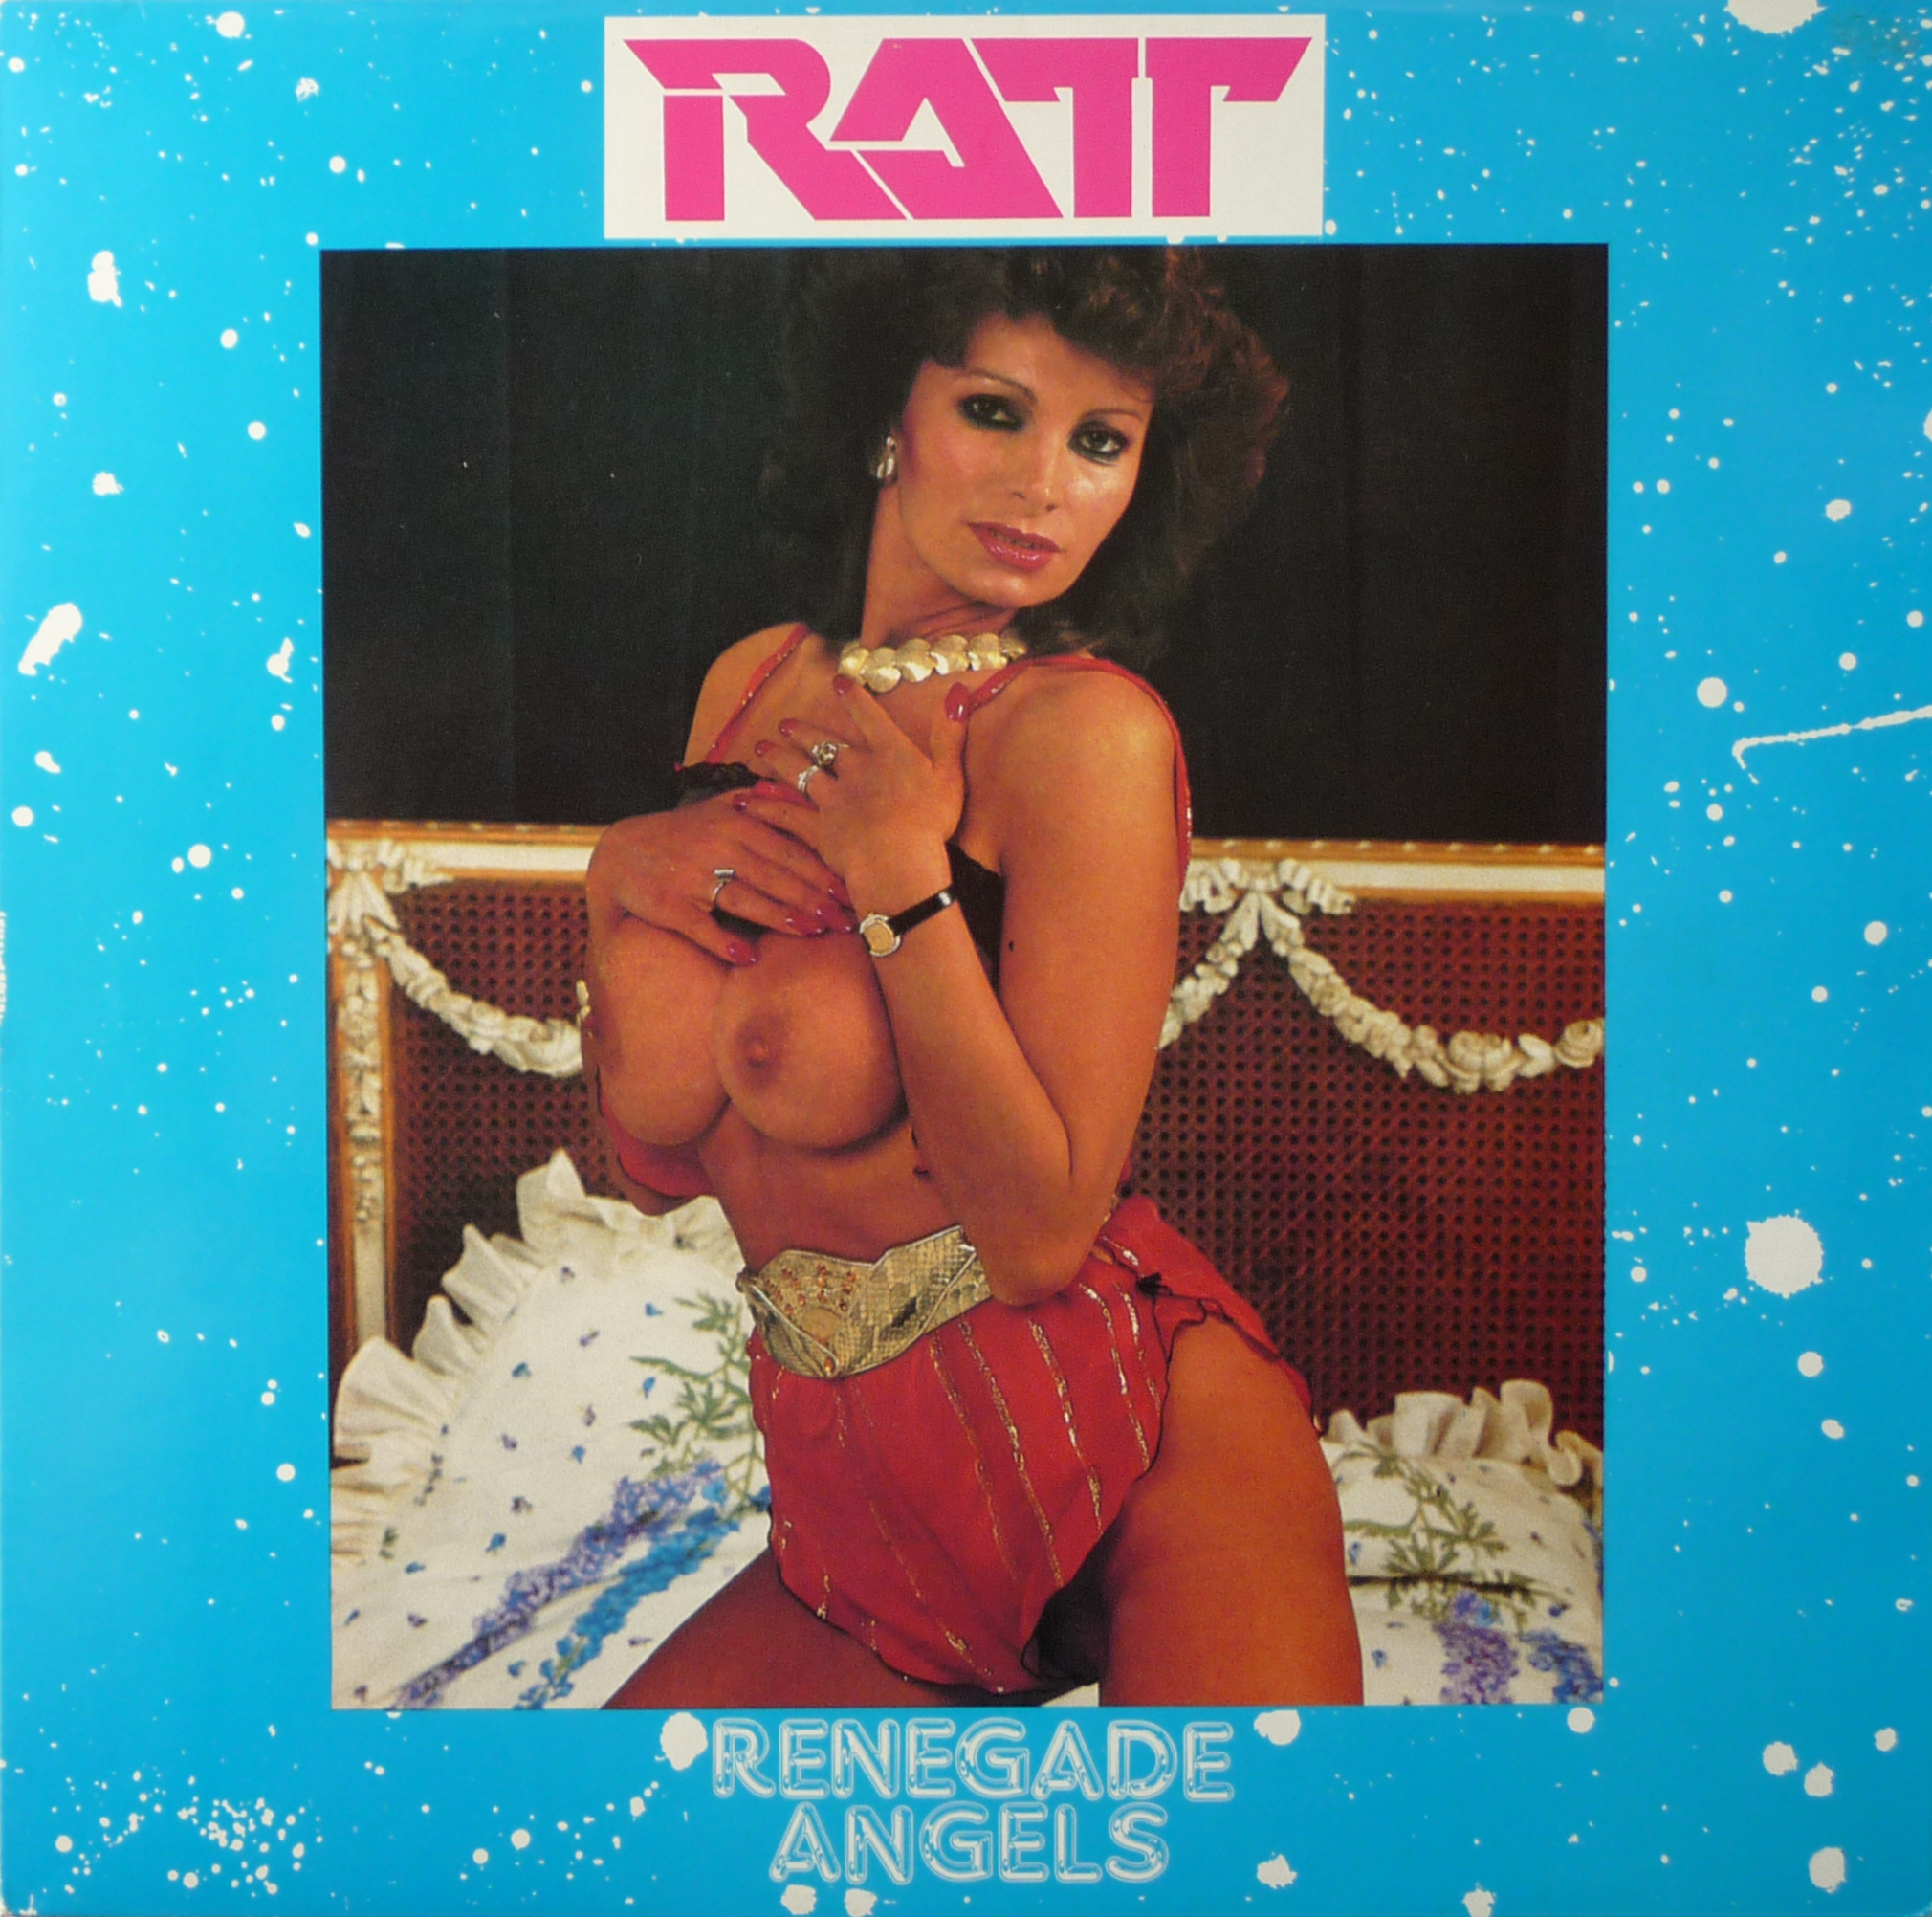 Ratt invasion of your privacy album cover girl